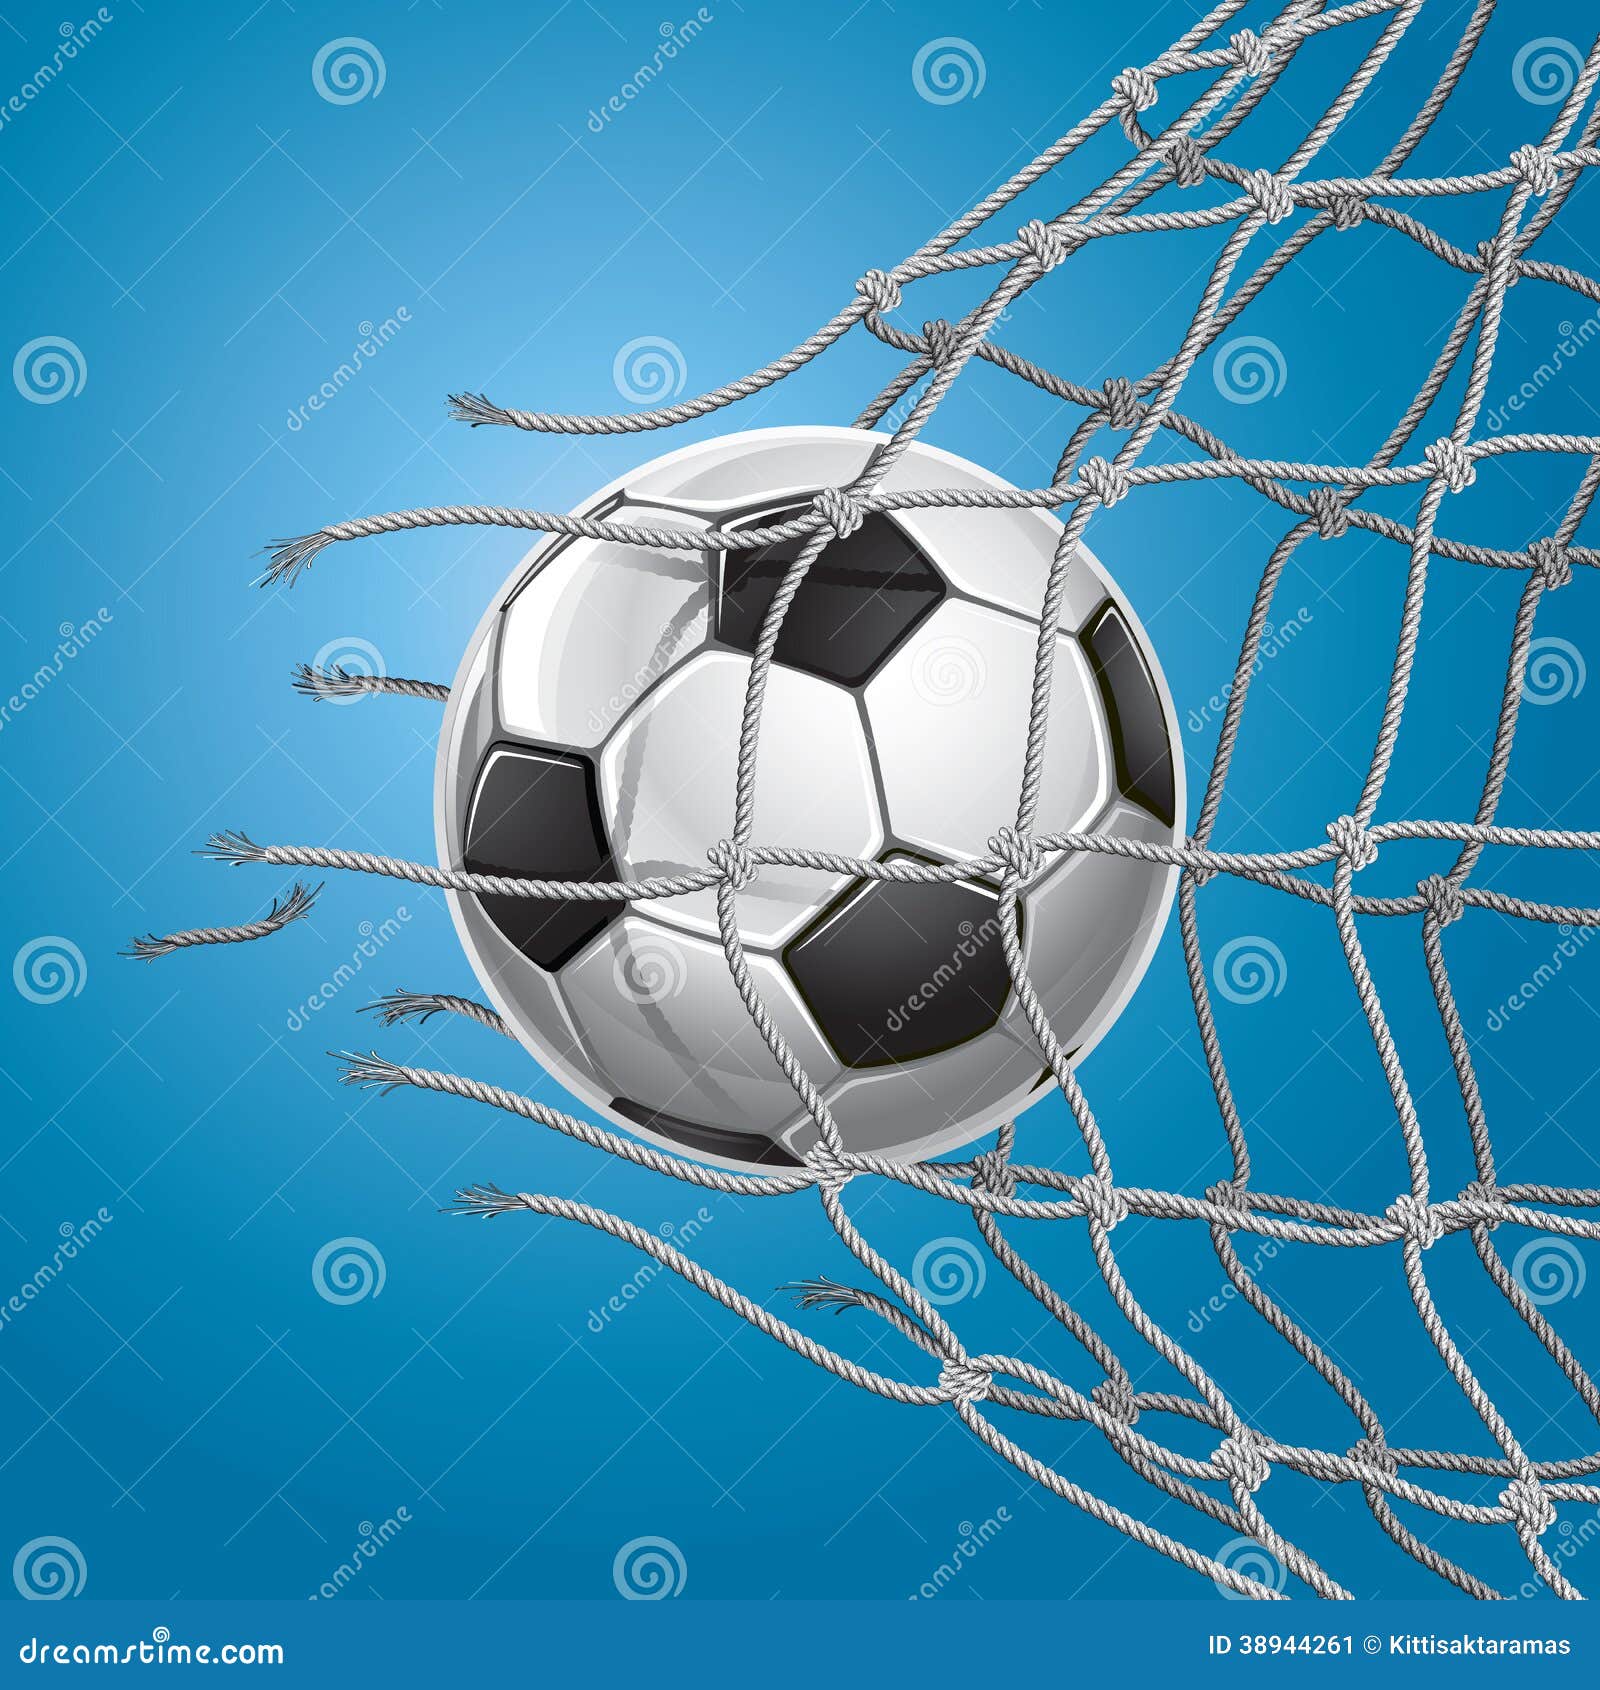 soccer ball or football breaking through the net